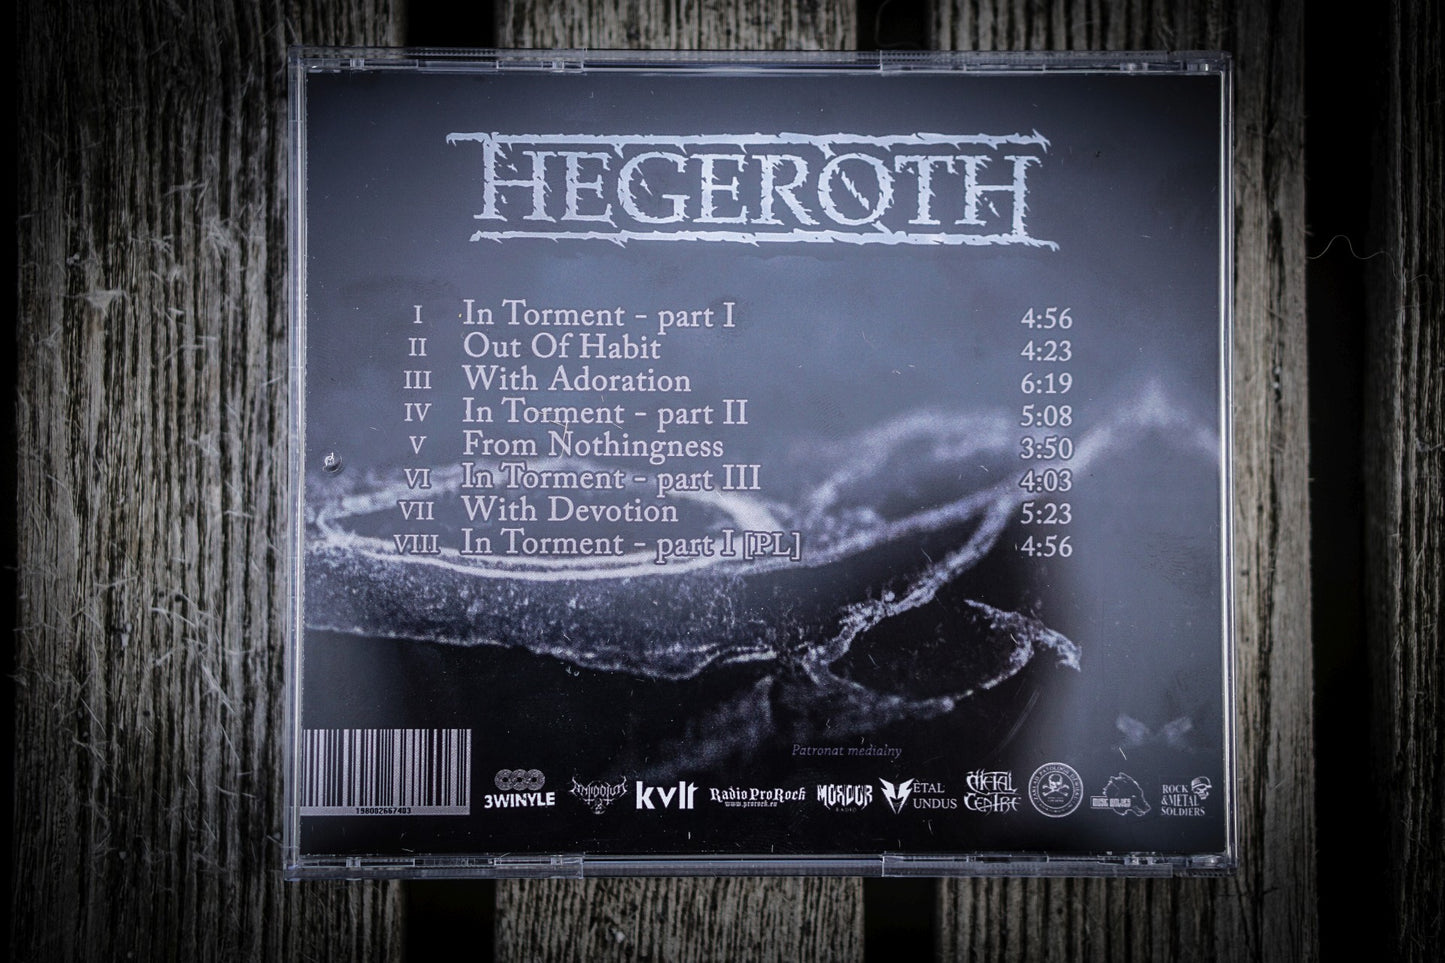 Hegeroth Sacra Doctrina CD